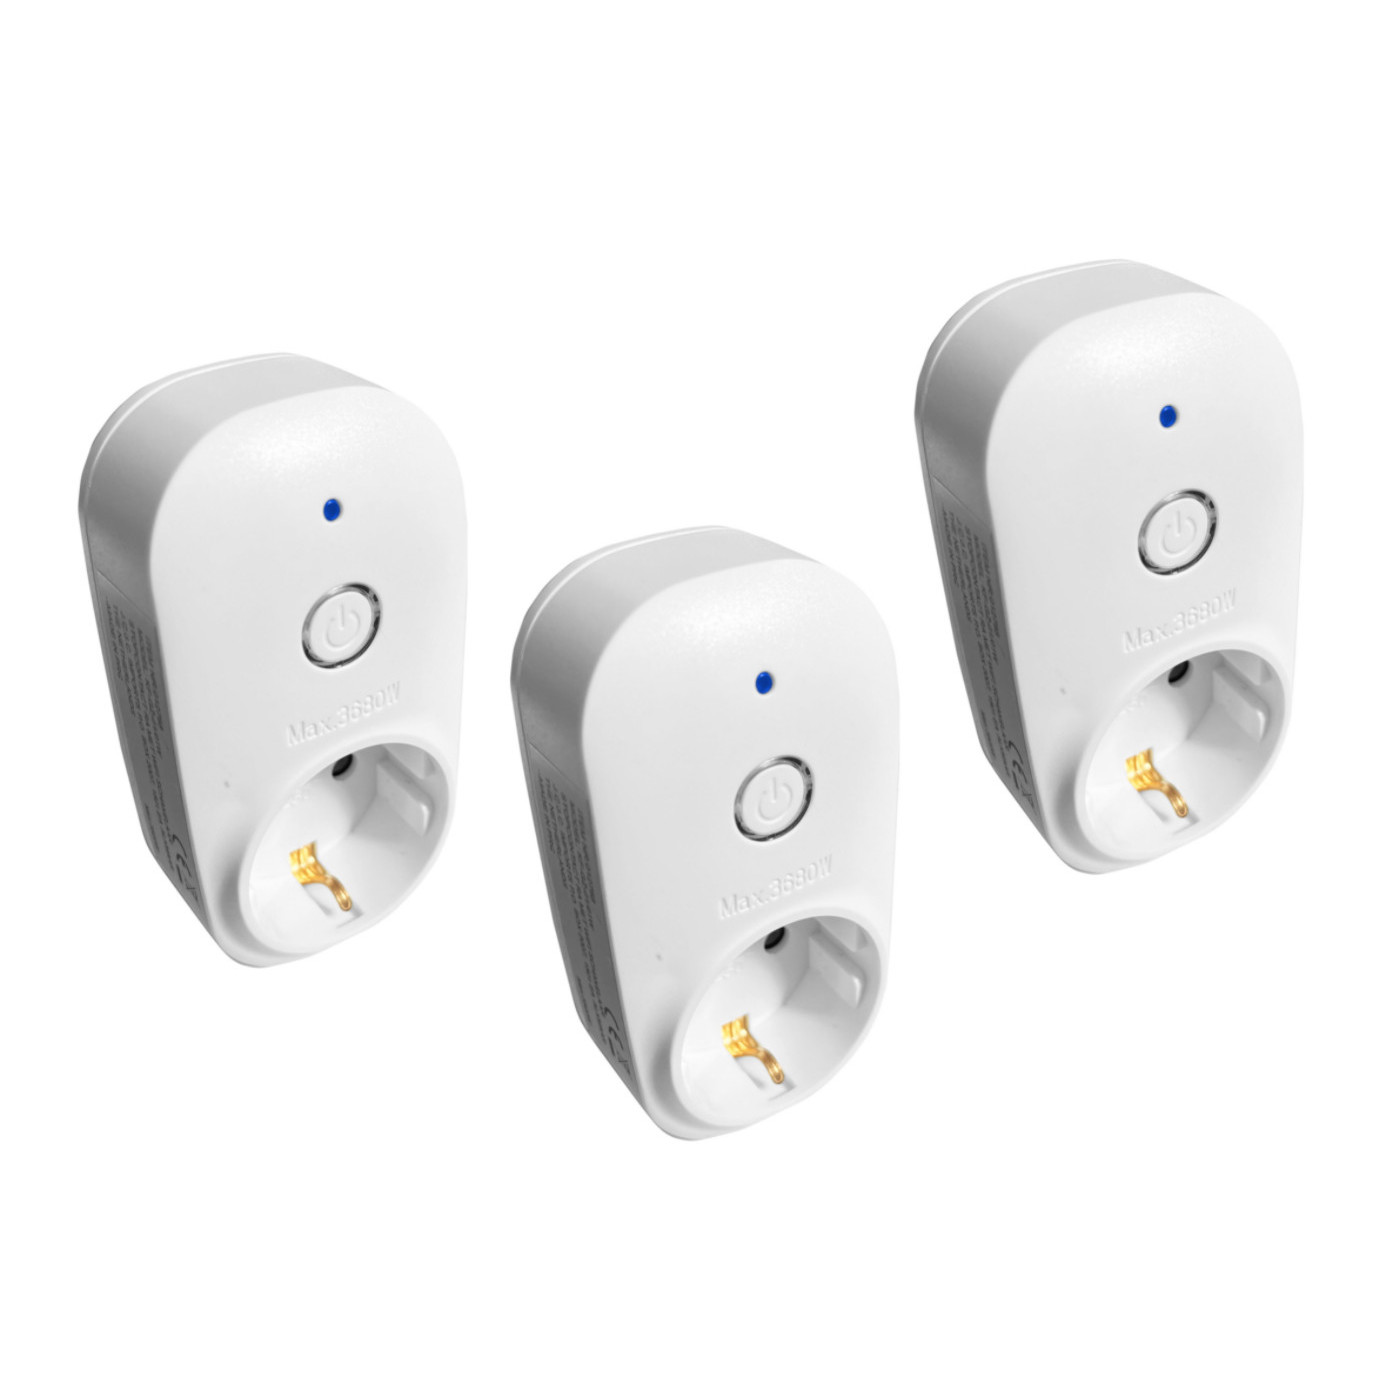 Set of 3 smart plugs (wifi switches)